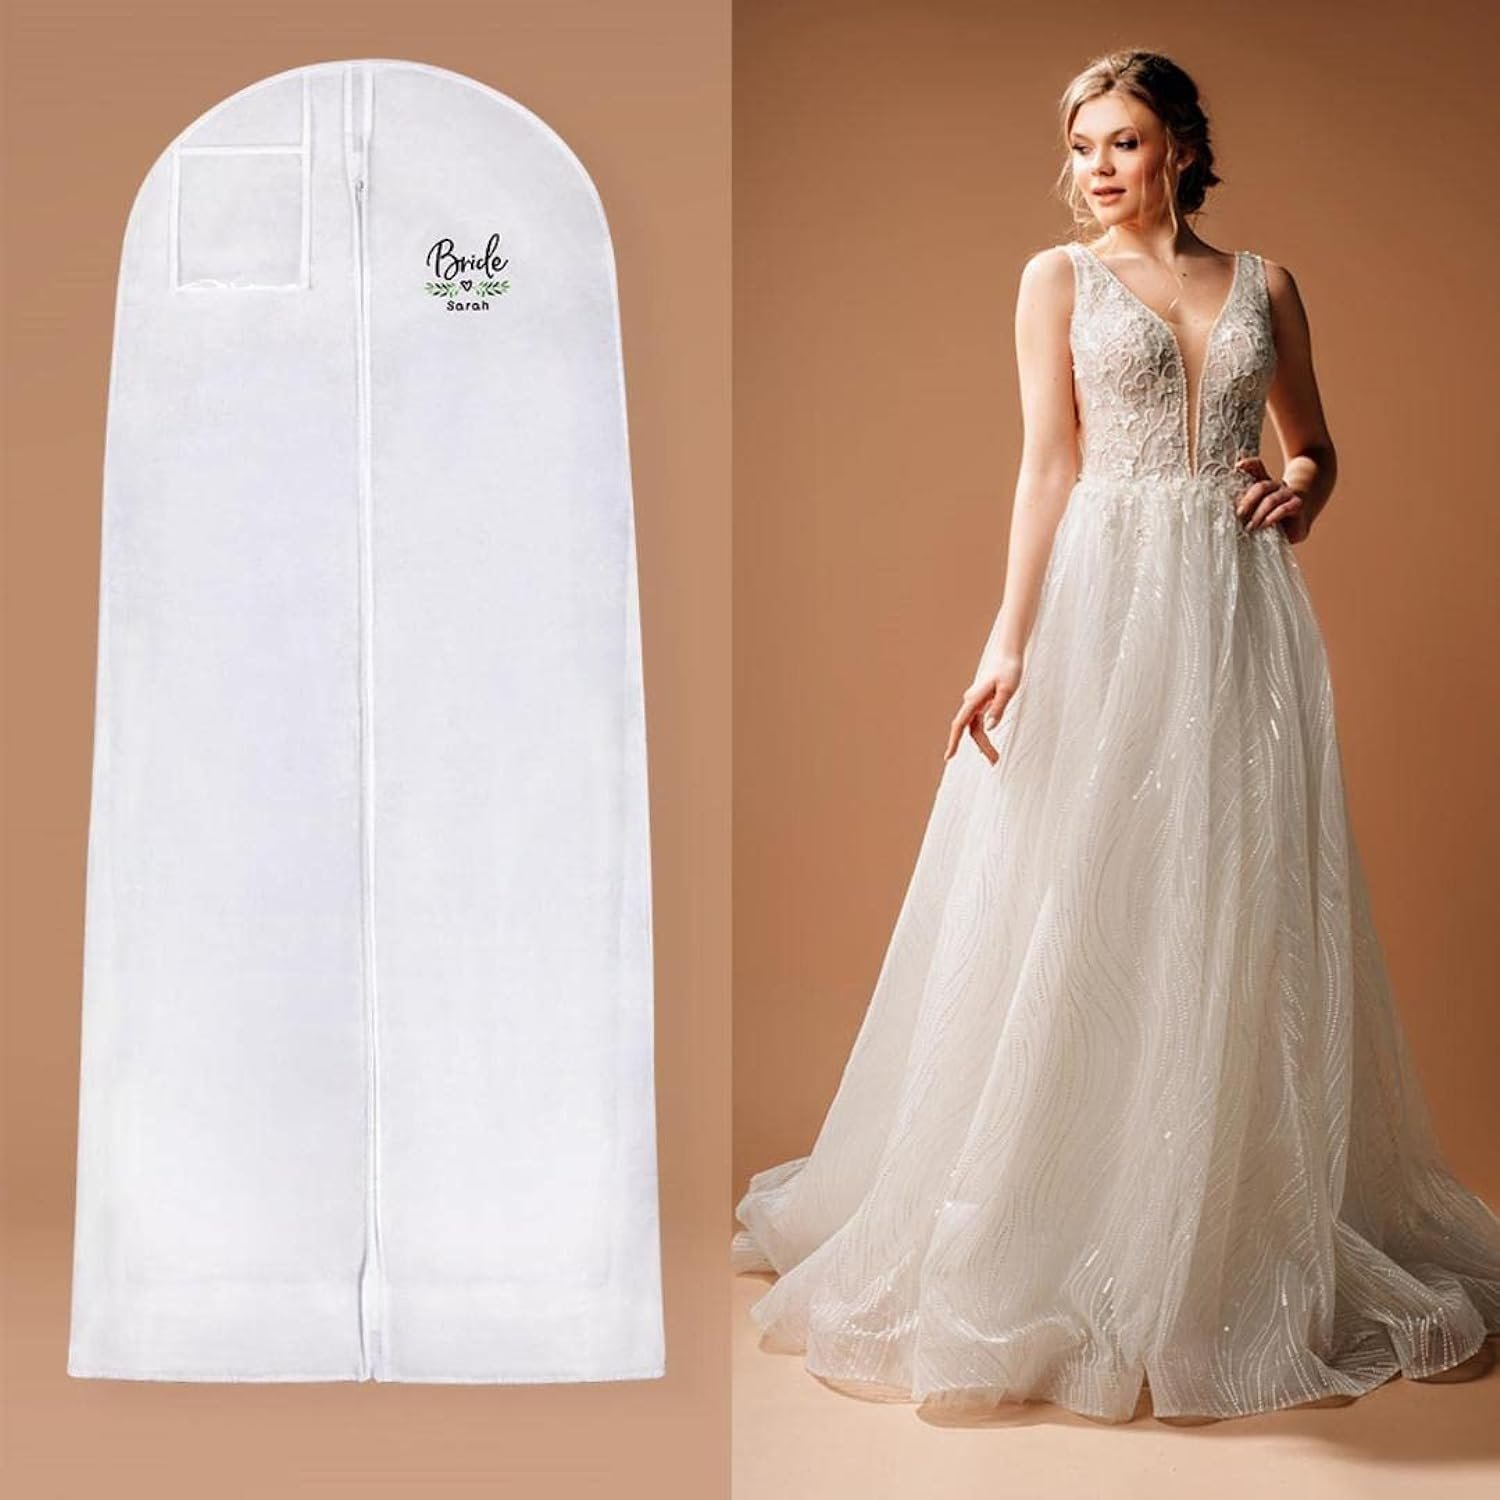 Personalized Bride  Bridesmaid Wedding Dress Garment Bag - Waterproof, Tear-Resistant Gown Storage for Bride,Dancer,Long Dresses(1 Garment Bag)